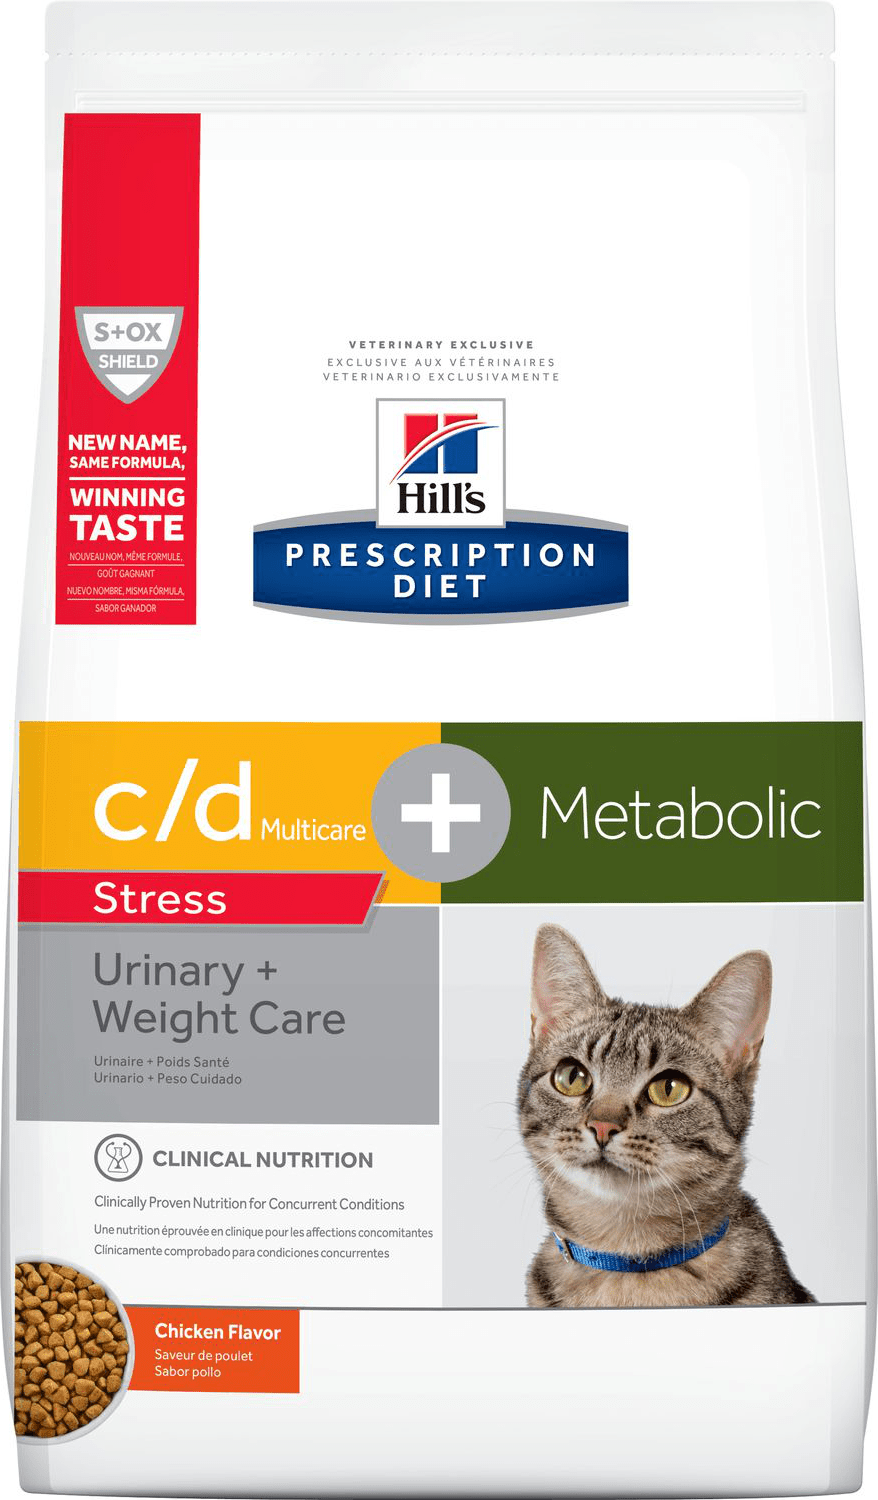 Hill's Prescription Diet C-d Multicare Stress + Metabolic (Dry)